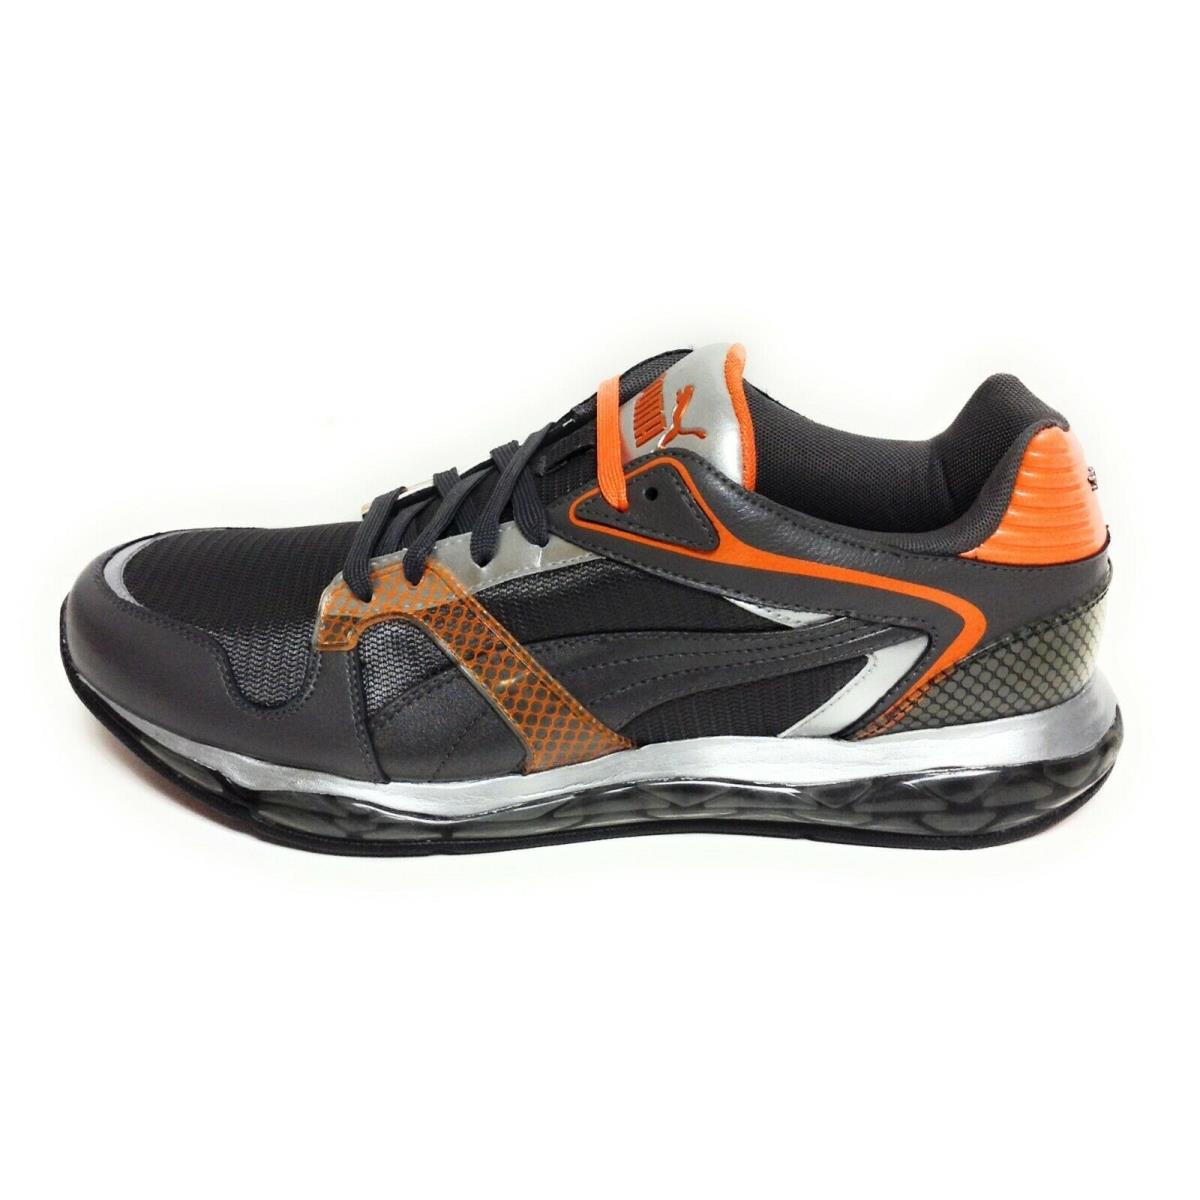 Mens Puma XS 850 Tech Mesh Lo 185053 02 Grey Orange 2010 DS Sneakers Shoes - Grey, Manufacturer: Dark Gull Grey